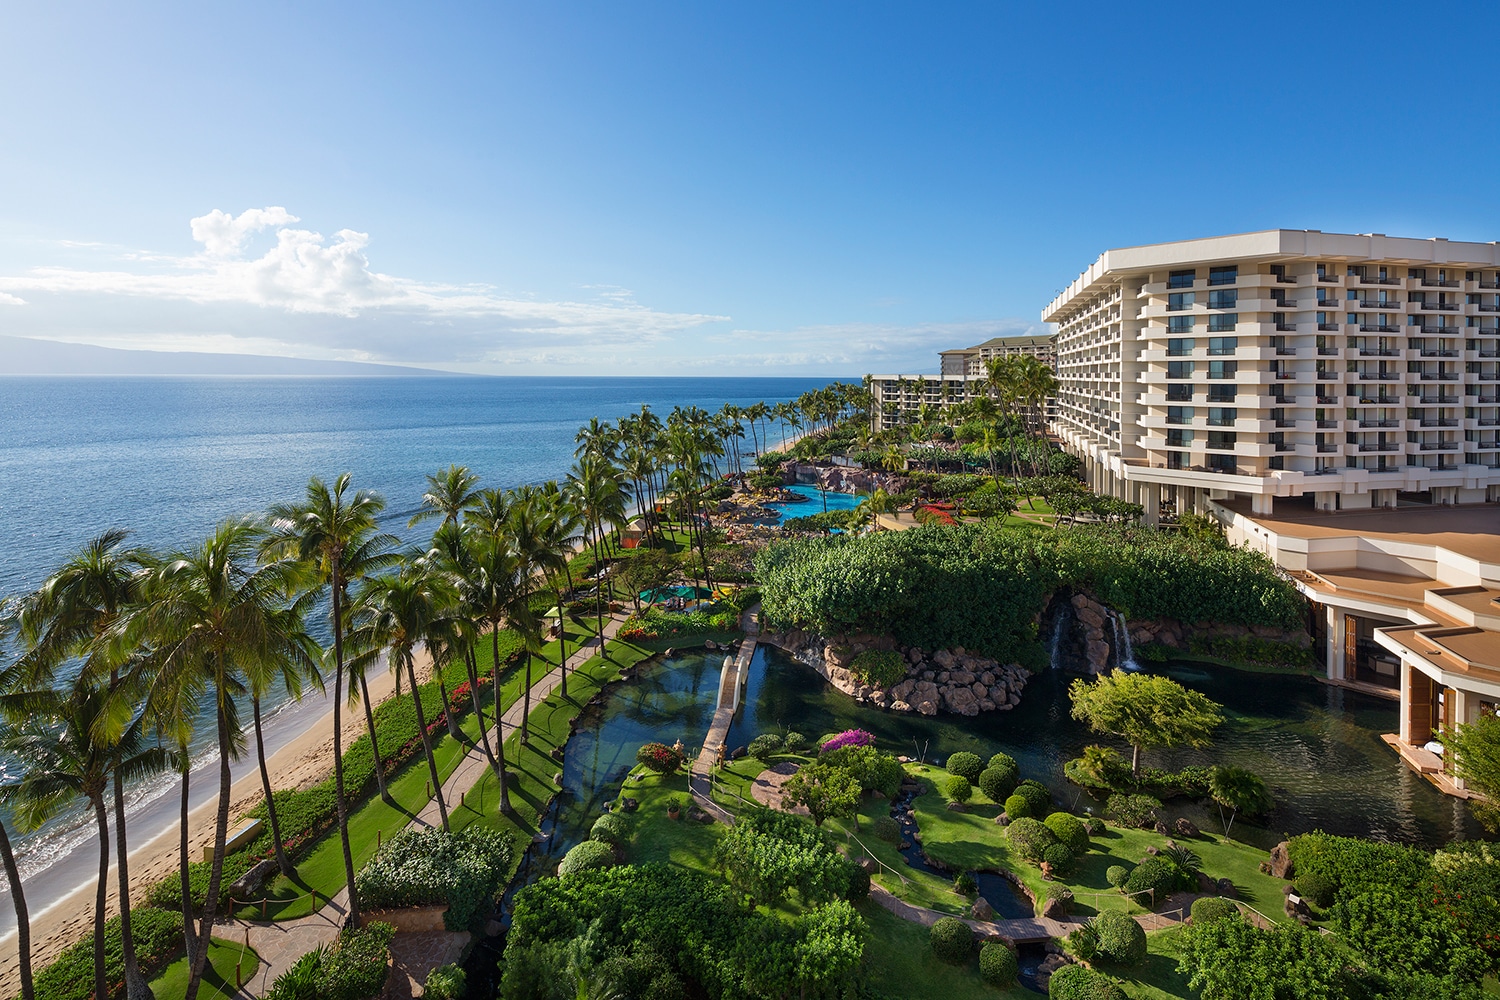 Cheap and Affordable Hotels in Maui: Hyatt Regency Maui Resort & Spa